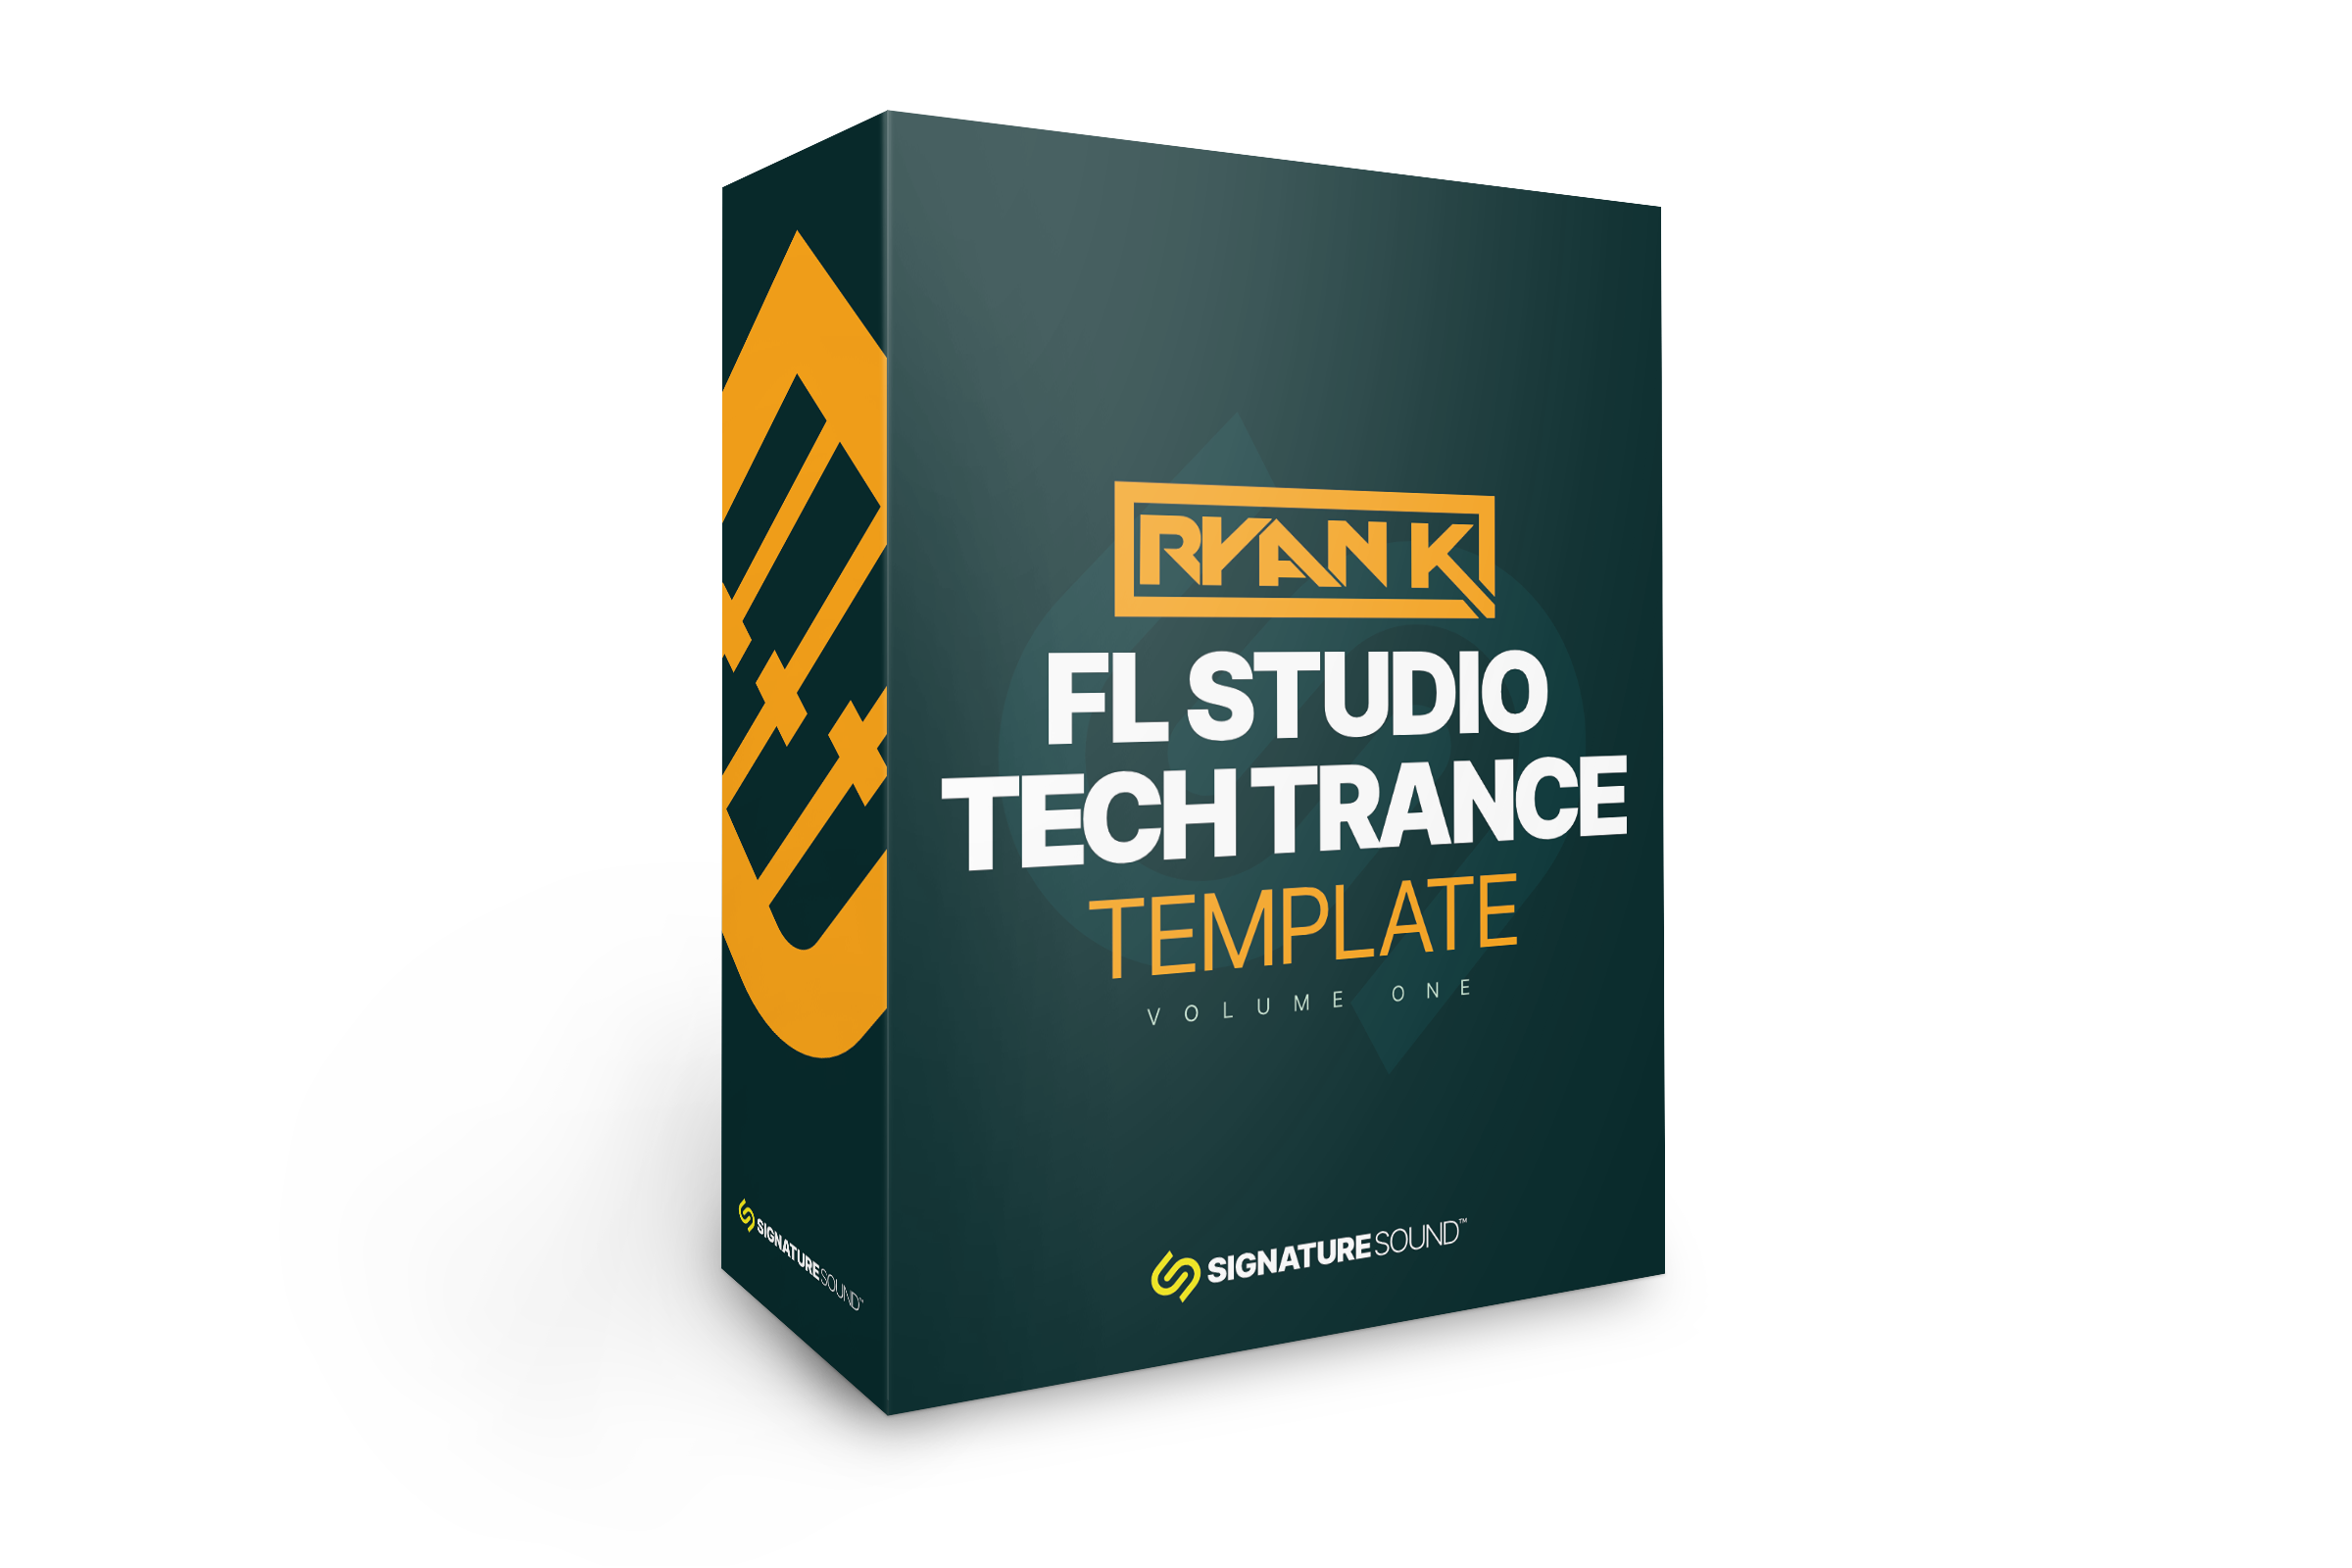 Ryan K Tech Trance Template [FL Studio] Volume One